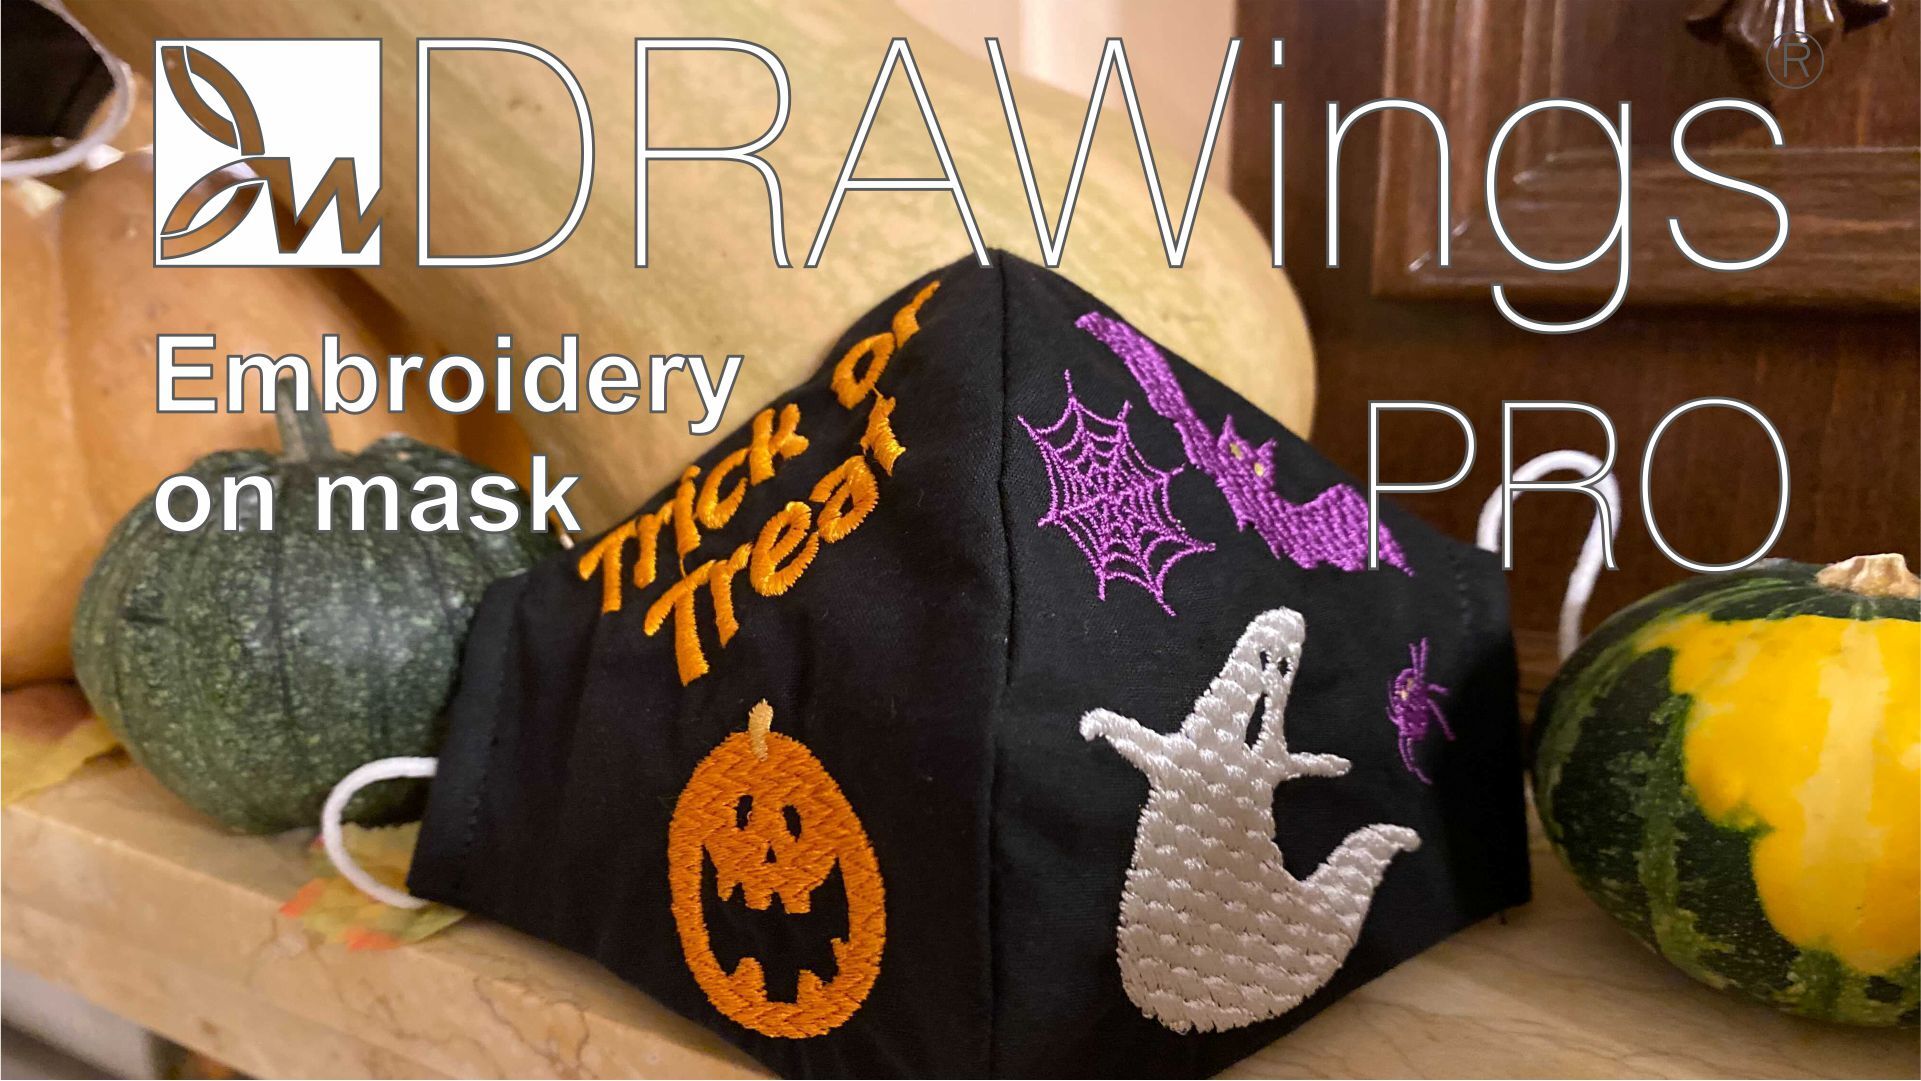 DRAWings Embroidery Halloween mask.jpg